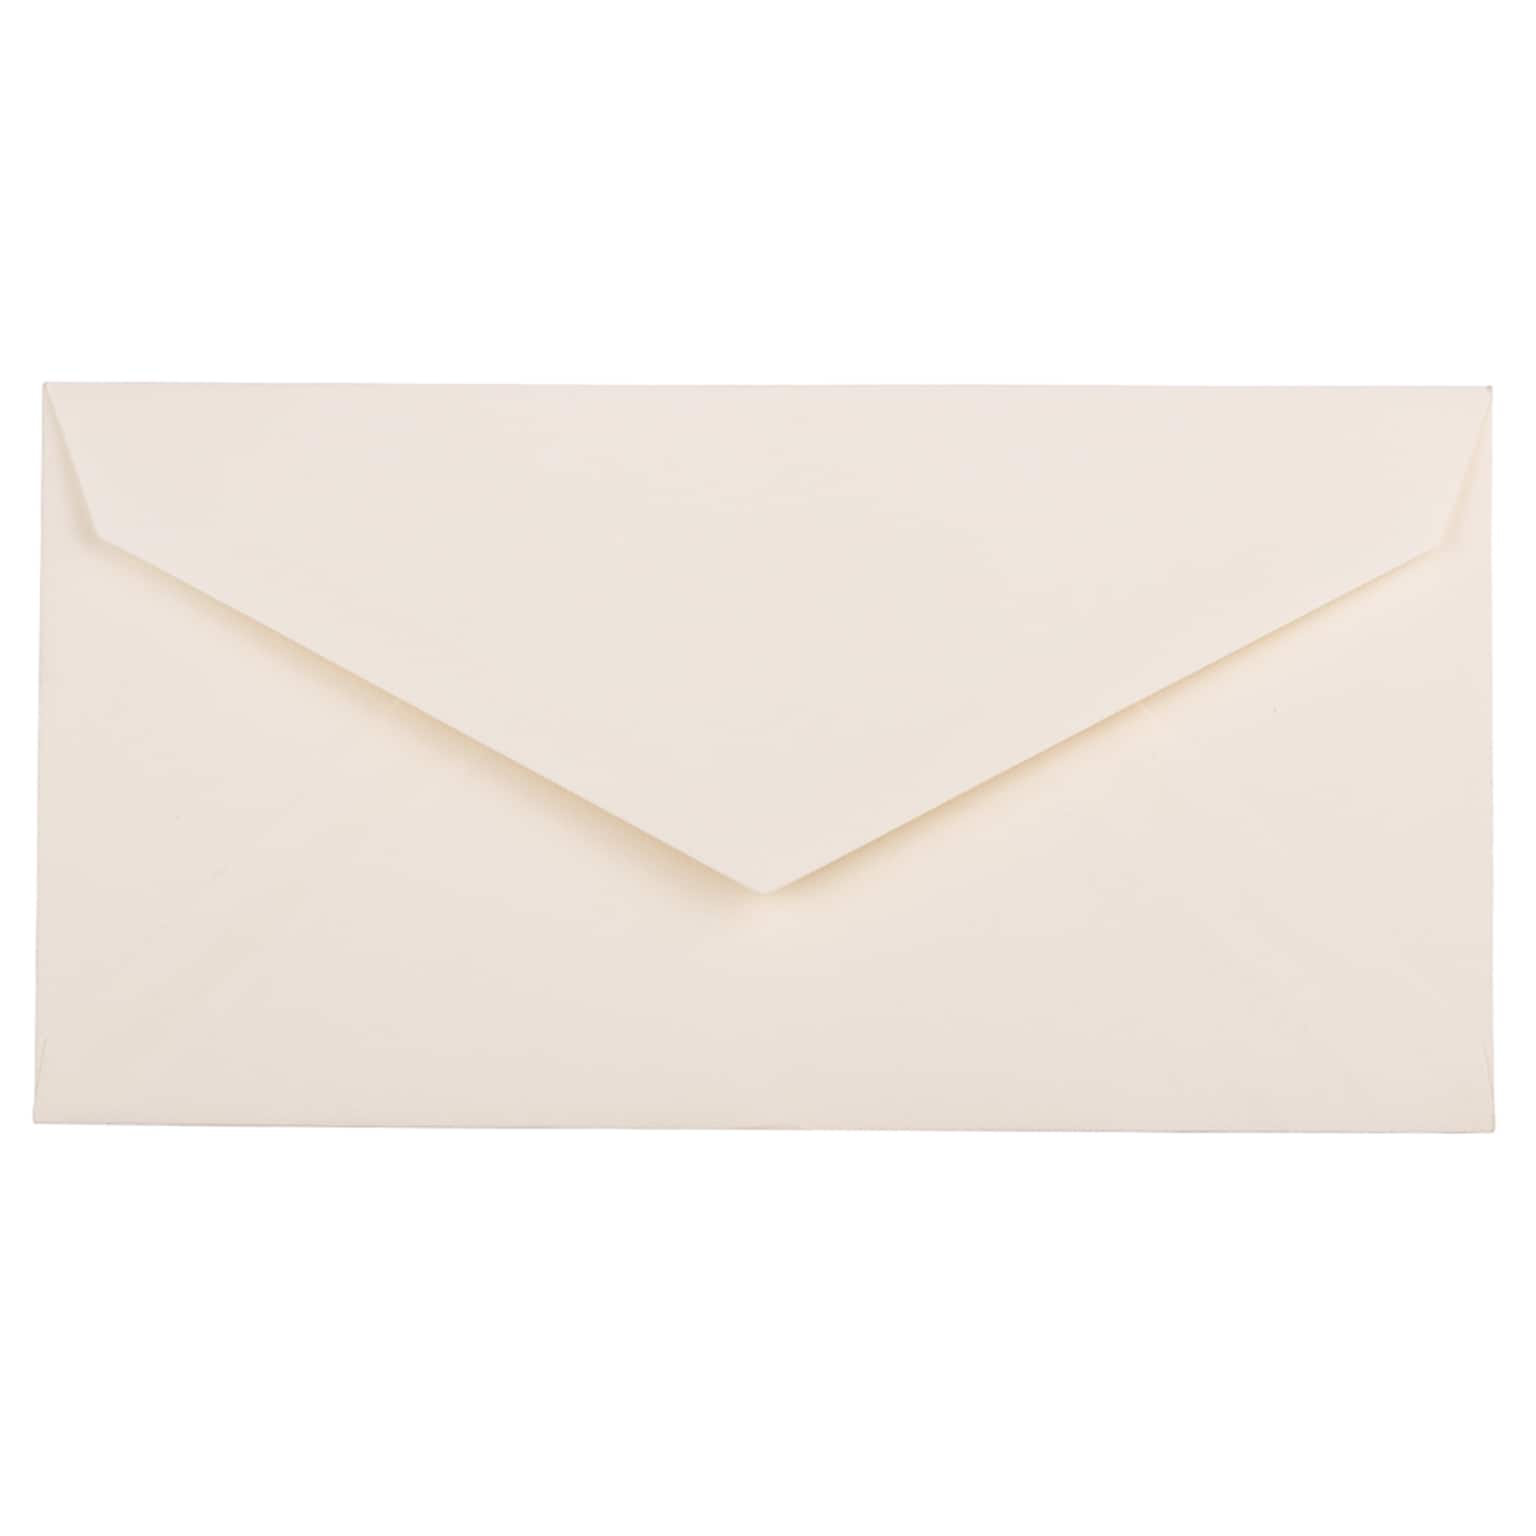 JAM Paper Monarch Open End #7 Invitation Envelope, 3 7/8 x 7 1/2, Natural White, 50/Pack (3197090I)